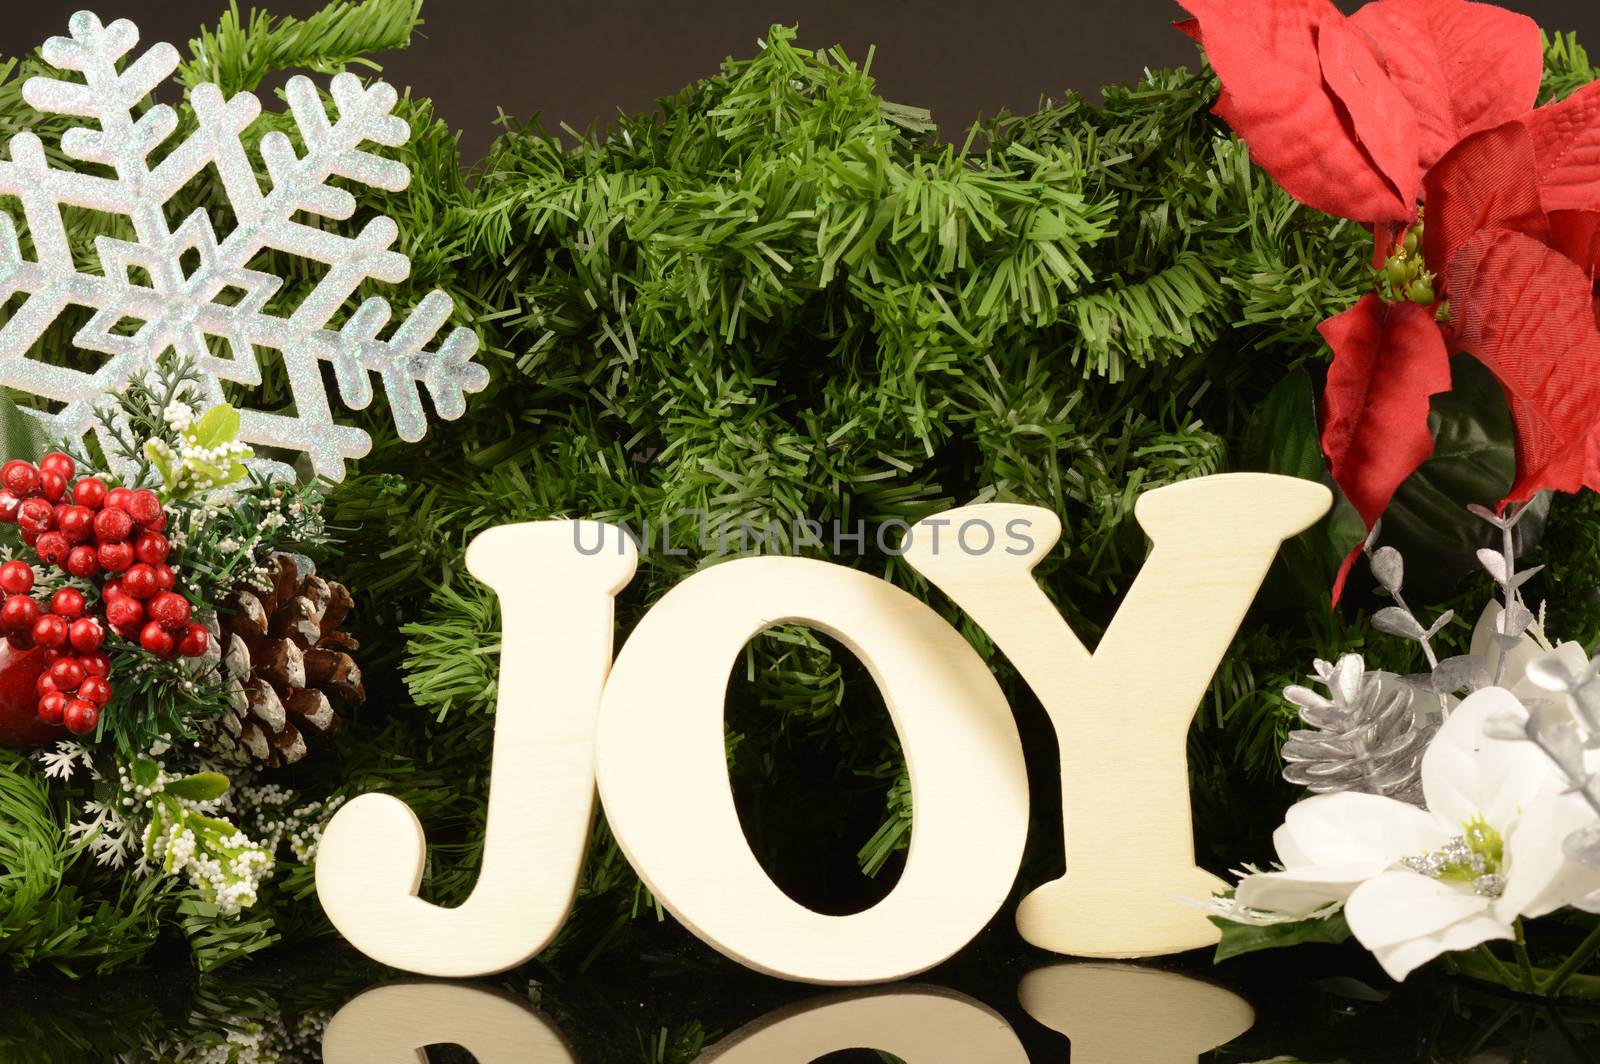 A festive holiday scene with a joyful expression.